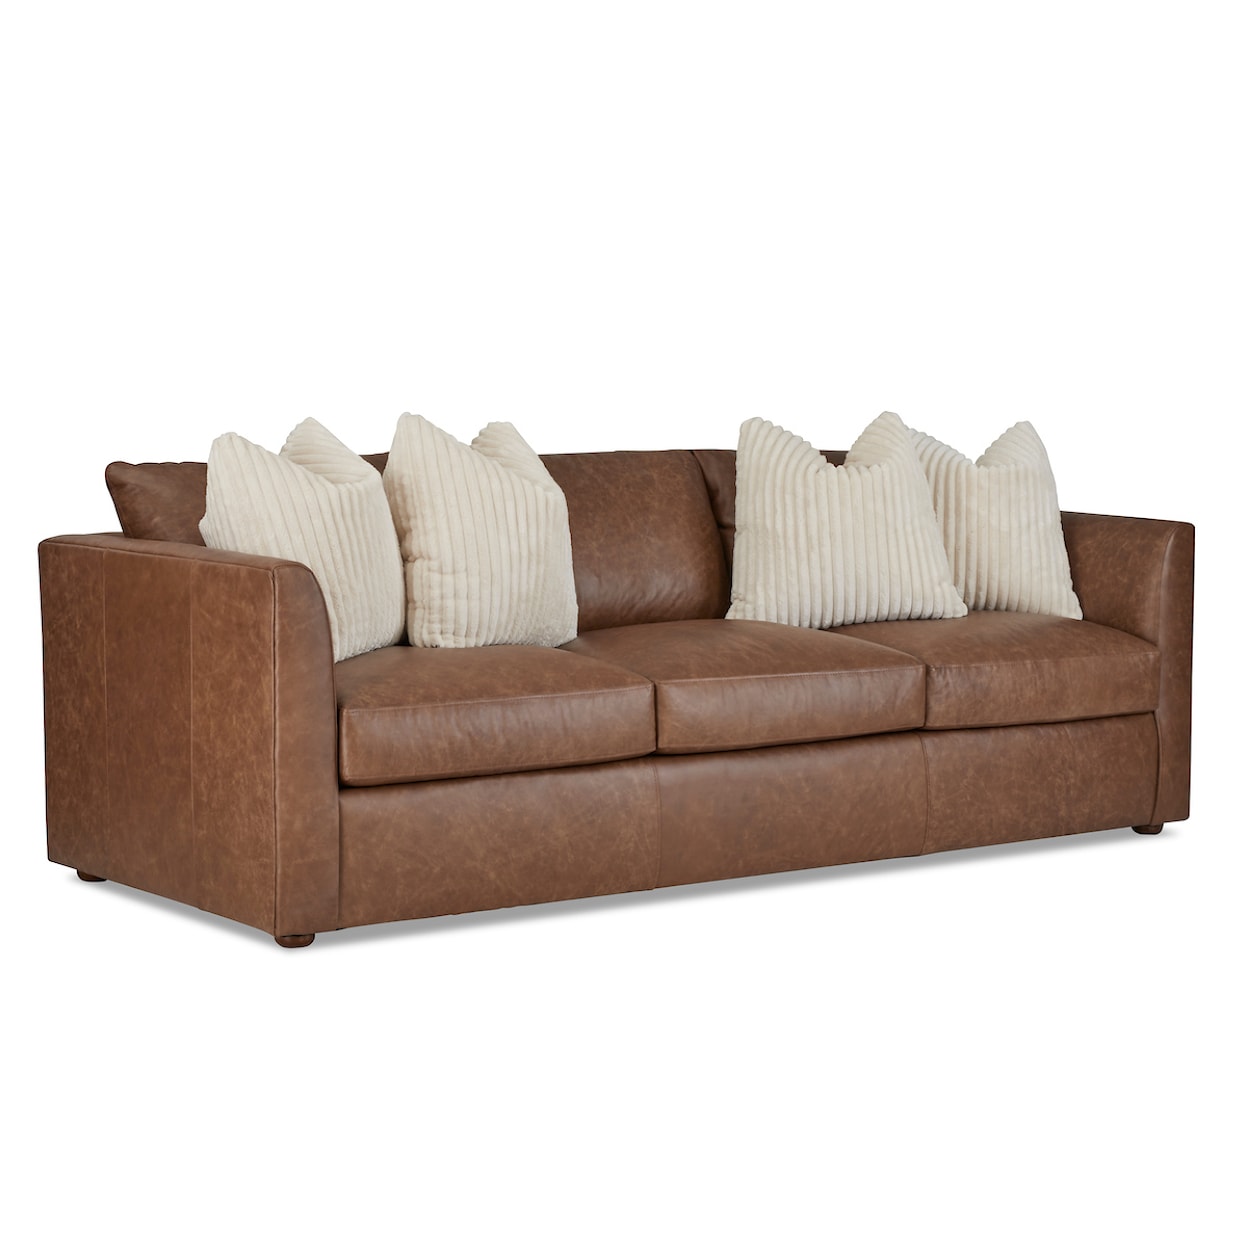 Klaussner Alamitos Leather Sofa